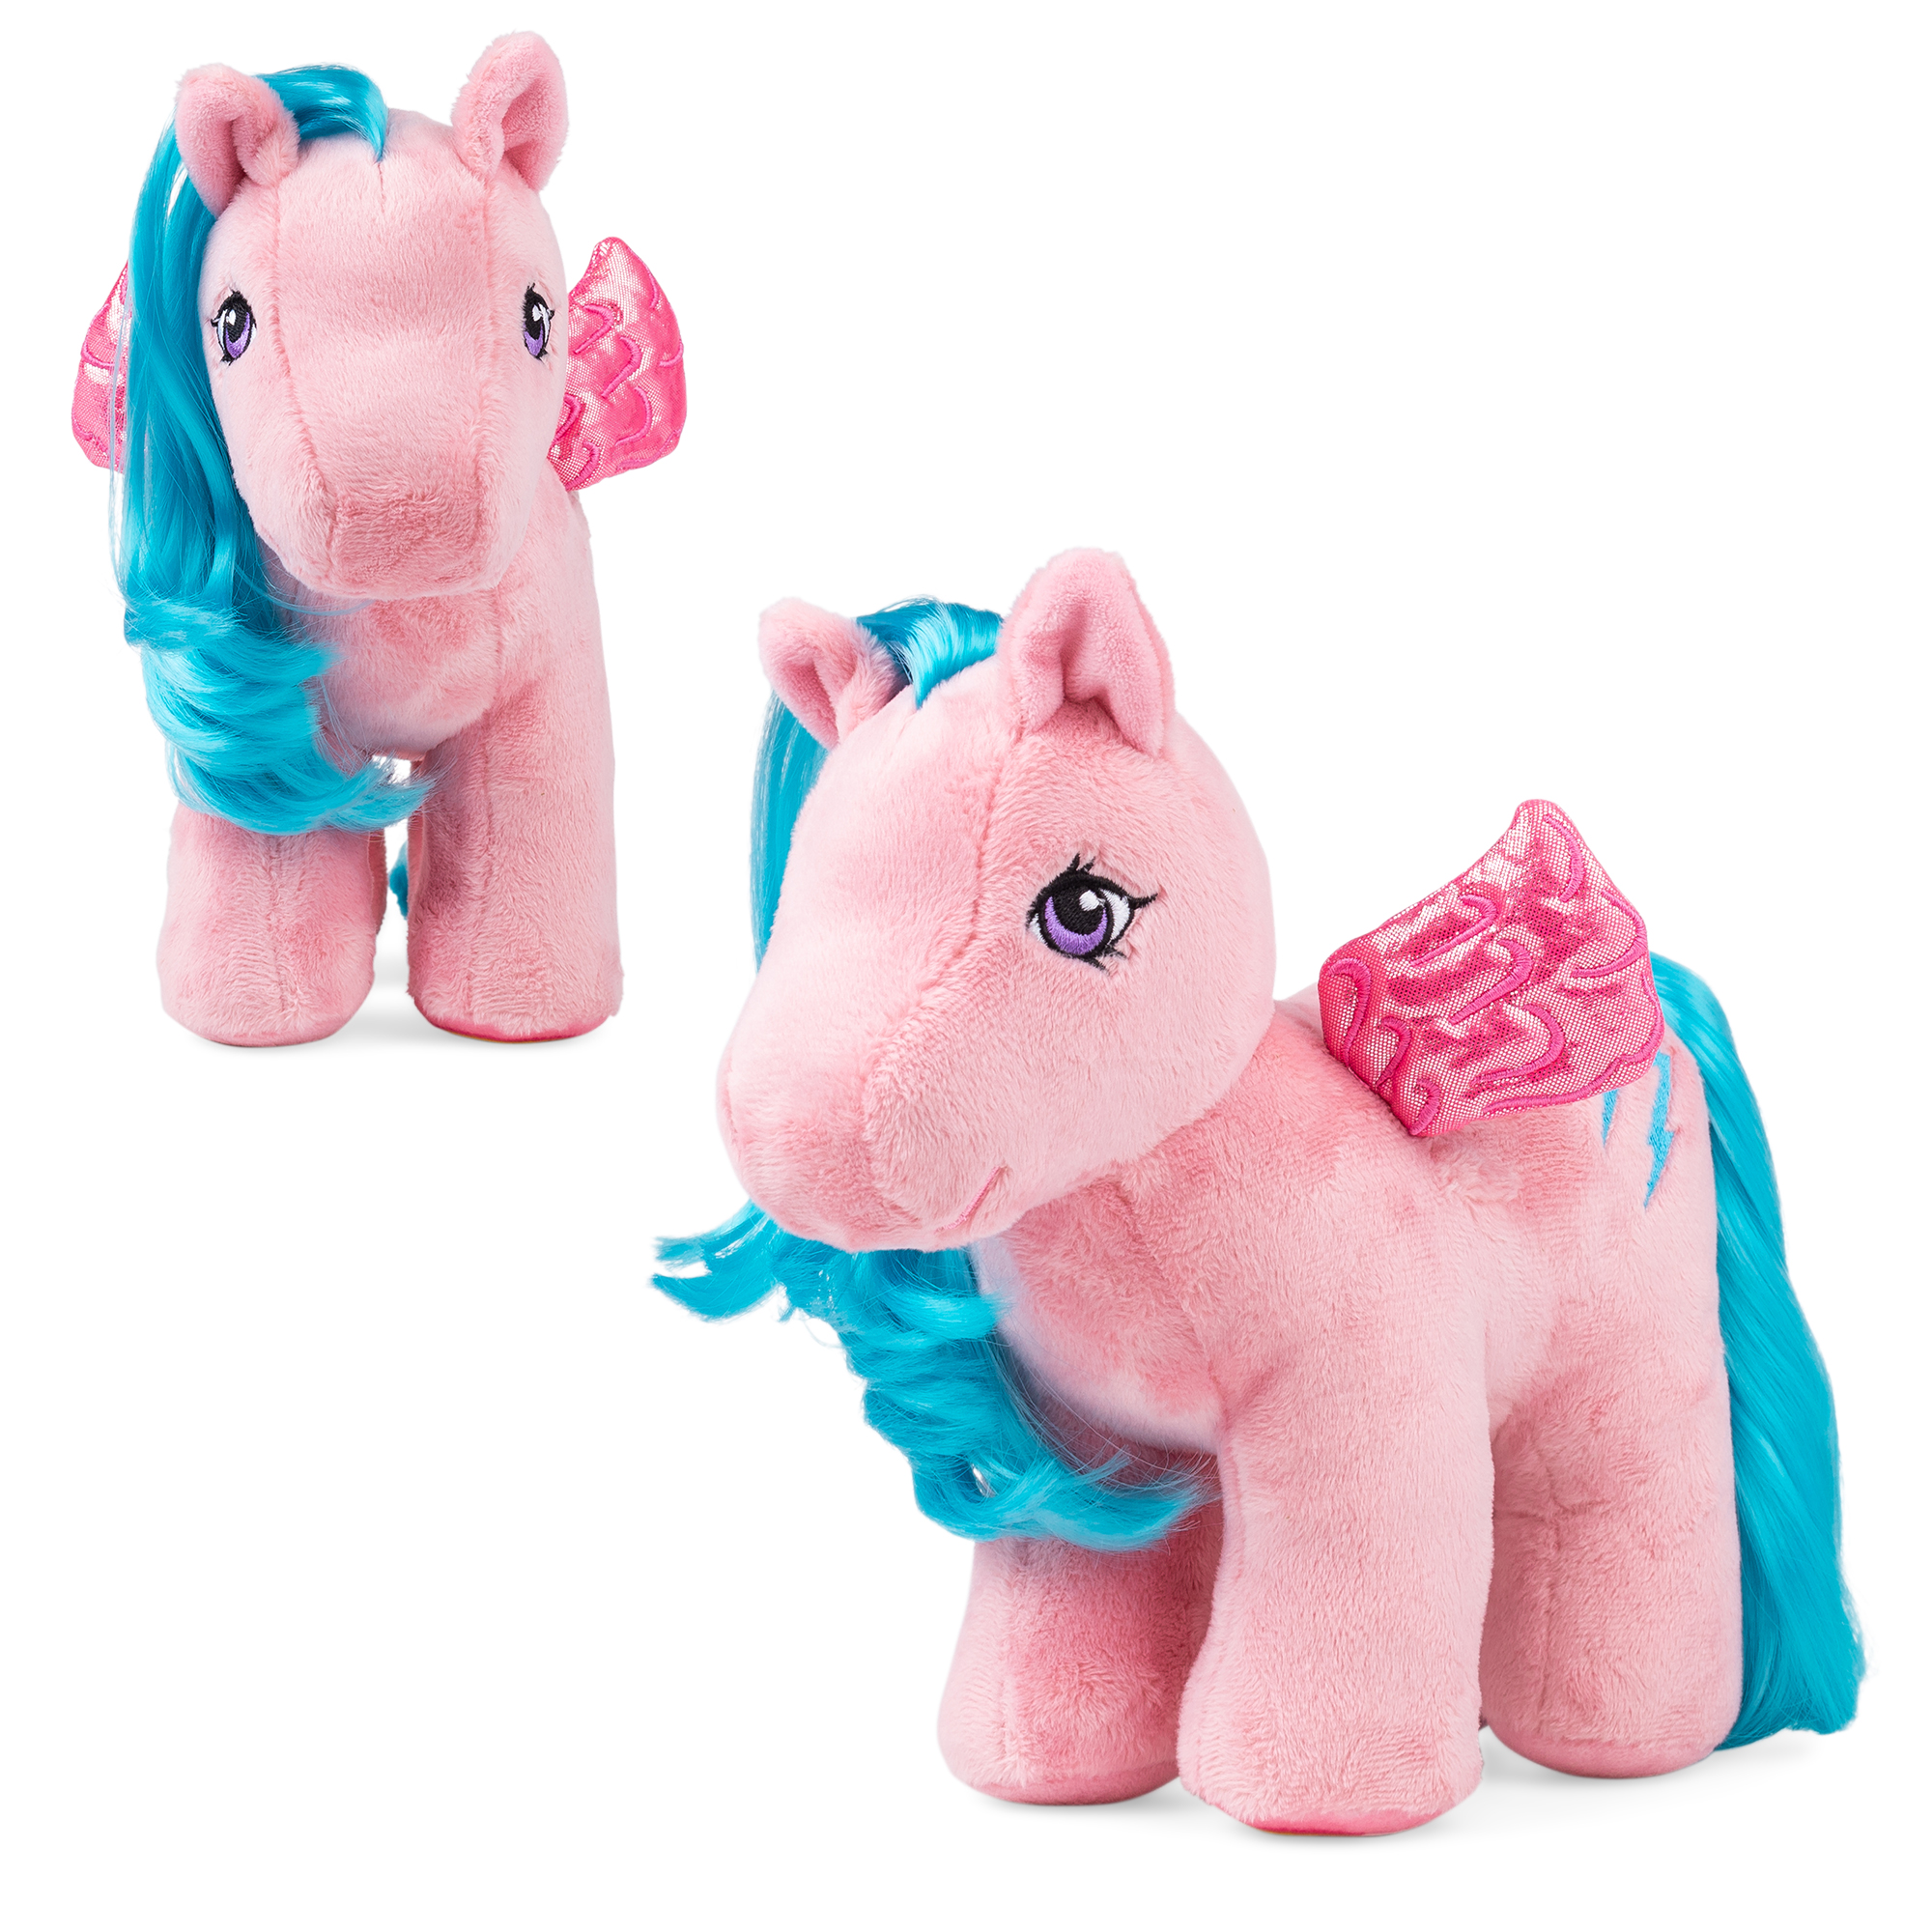 Pink plush pegasus pony - front view.